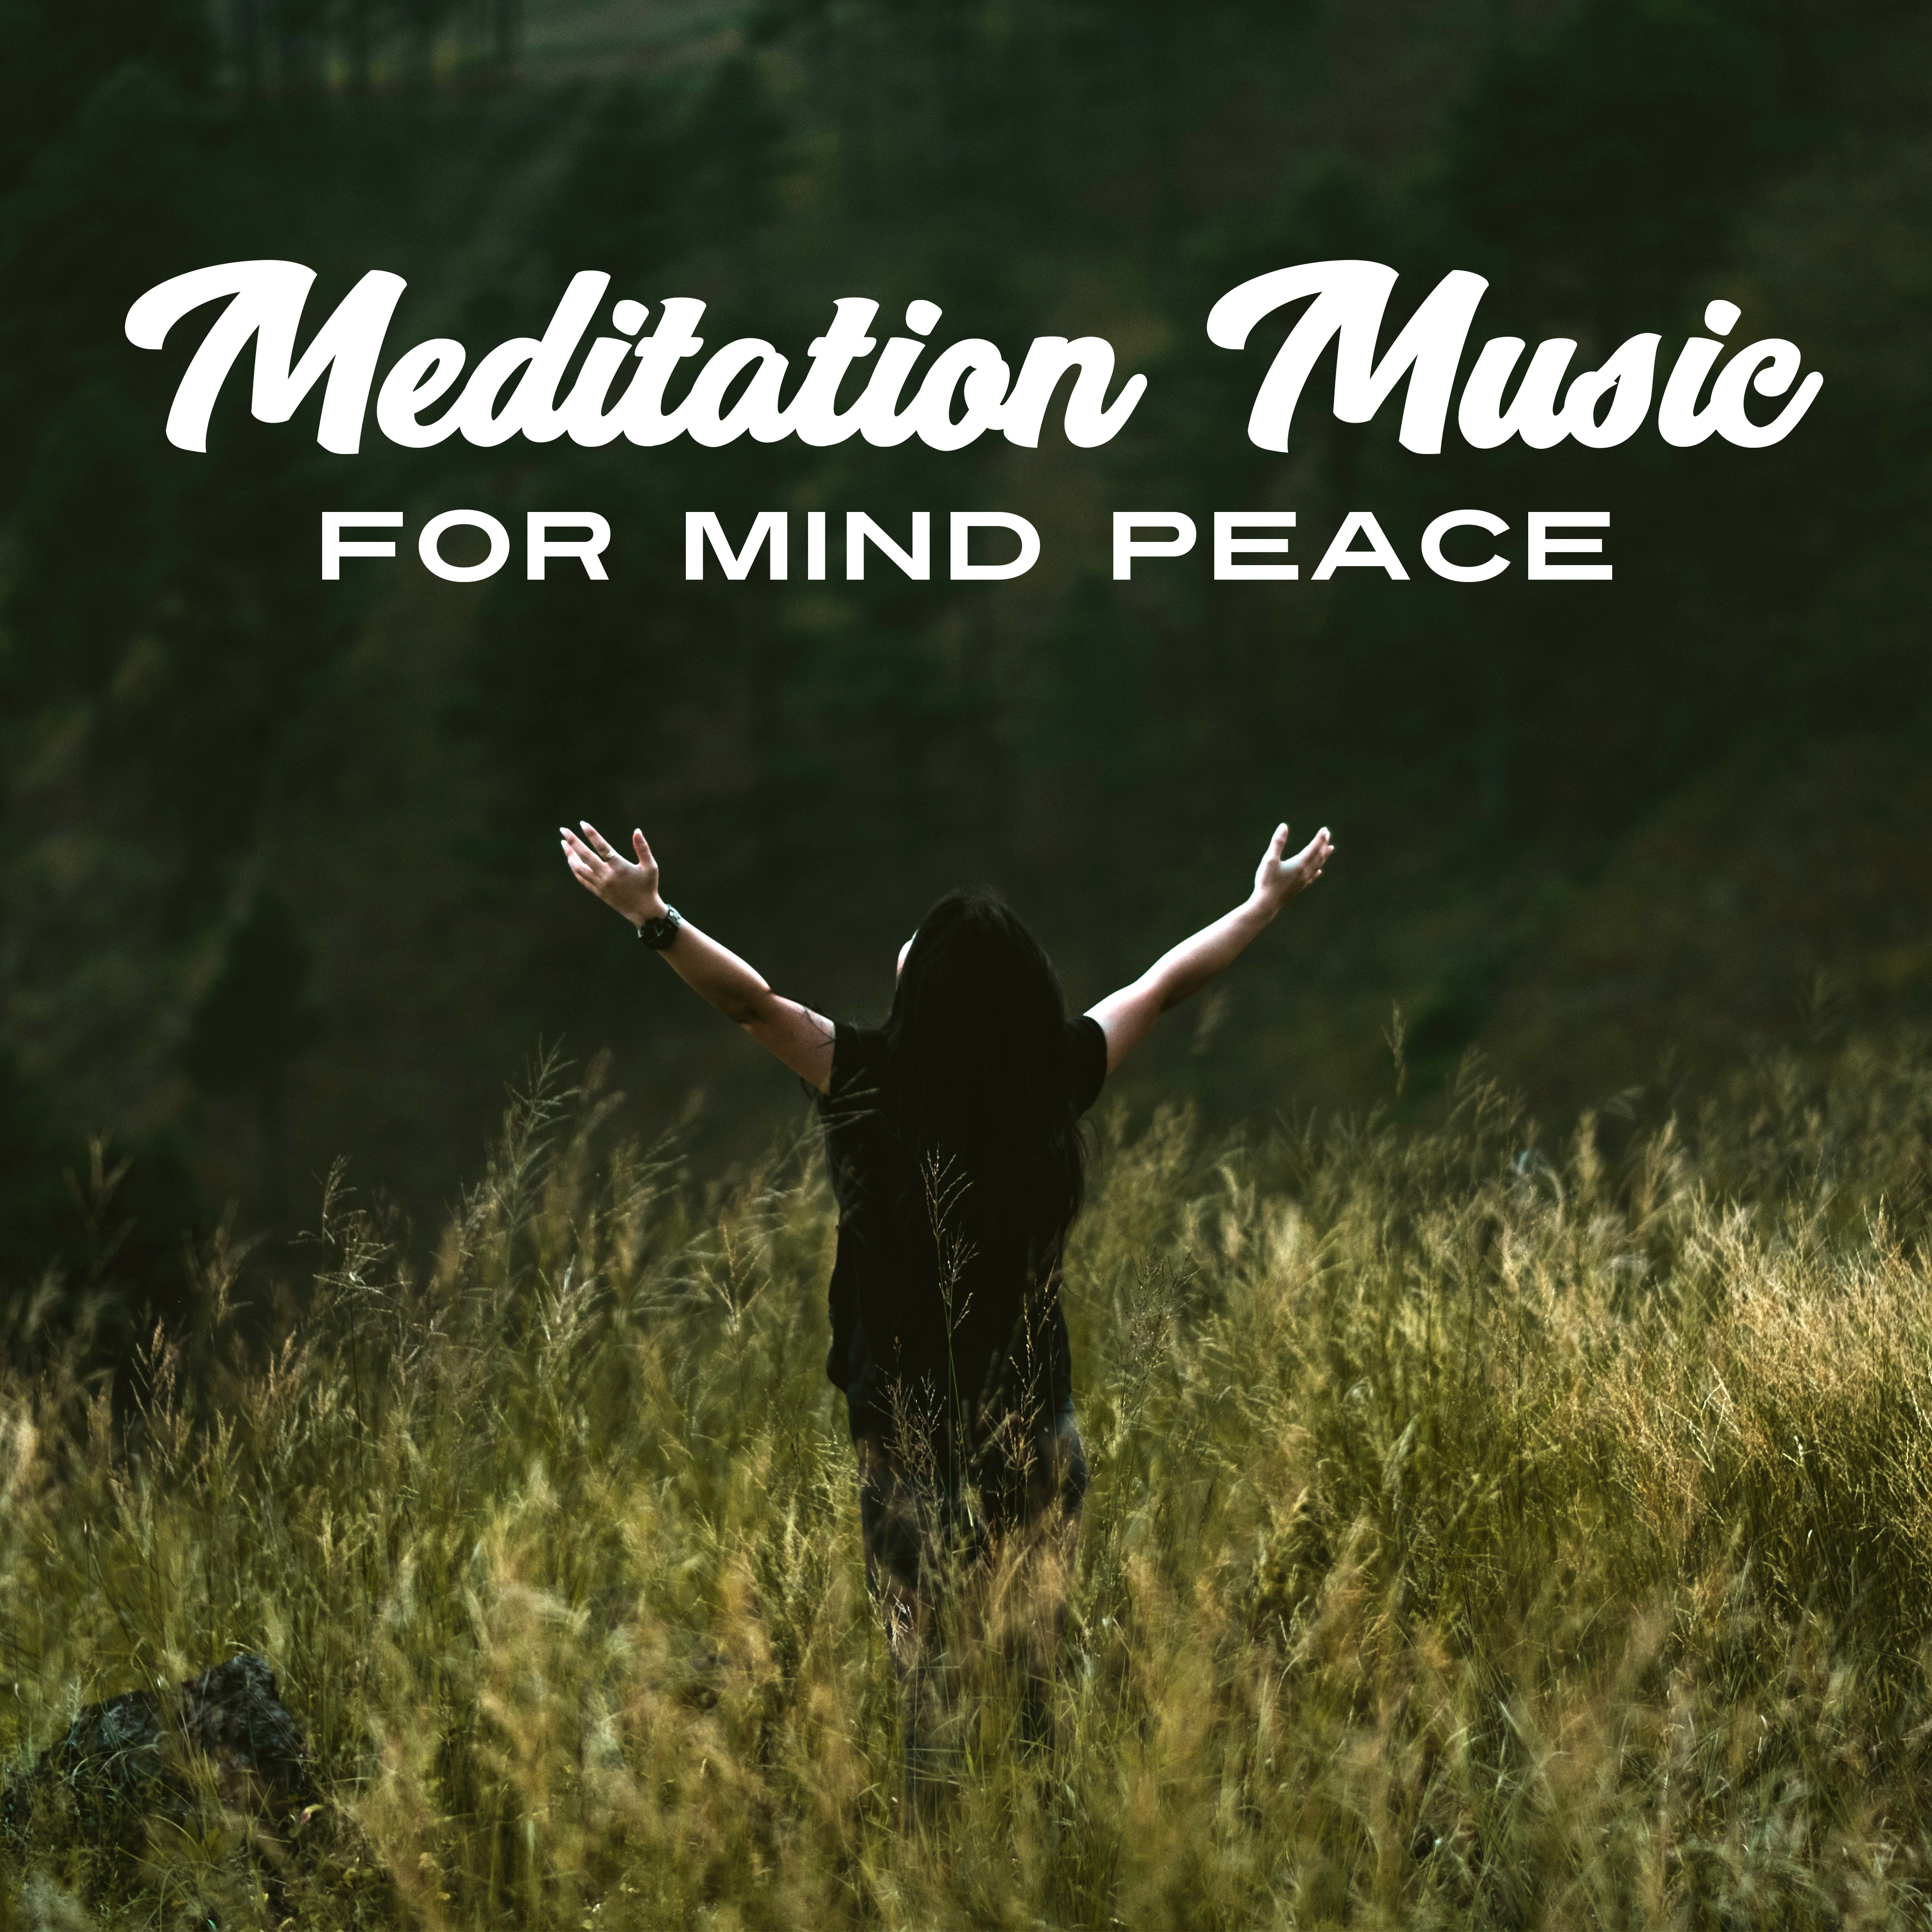 Meditation Music for Mind Peace  Calm Background Sounds to Meditate, Spirit Journey, Buddha Lounge